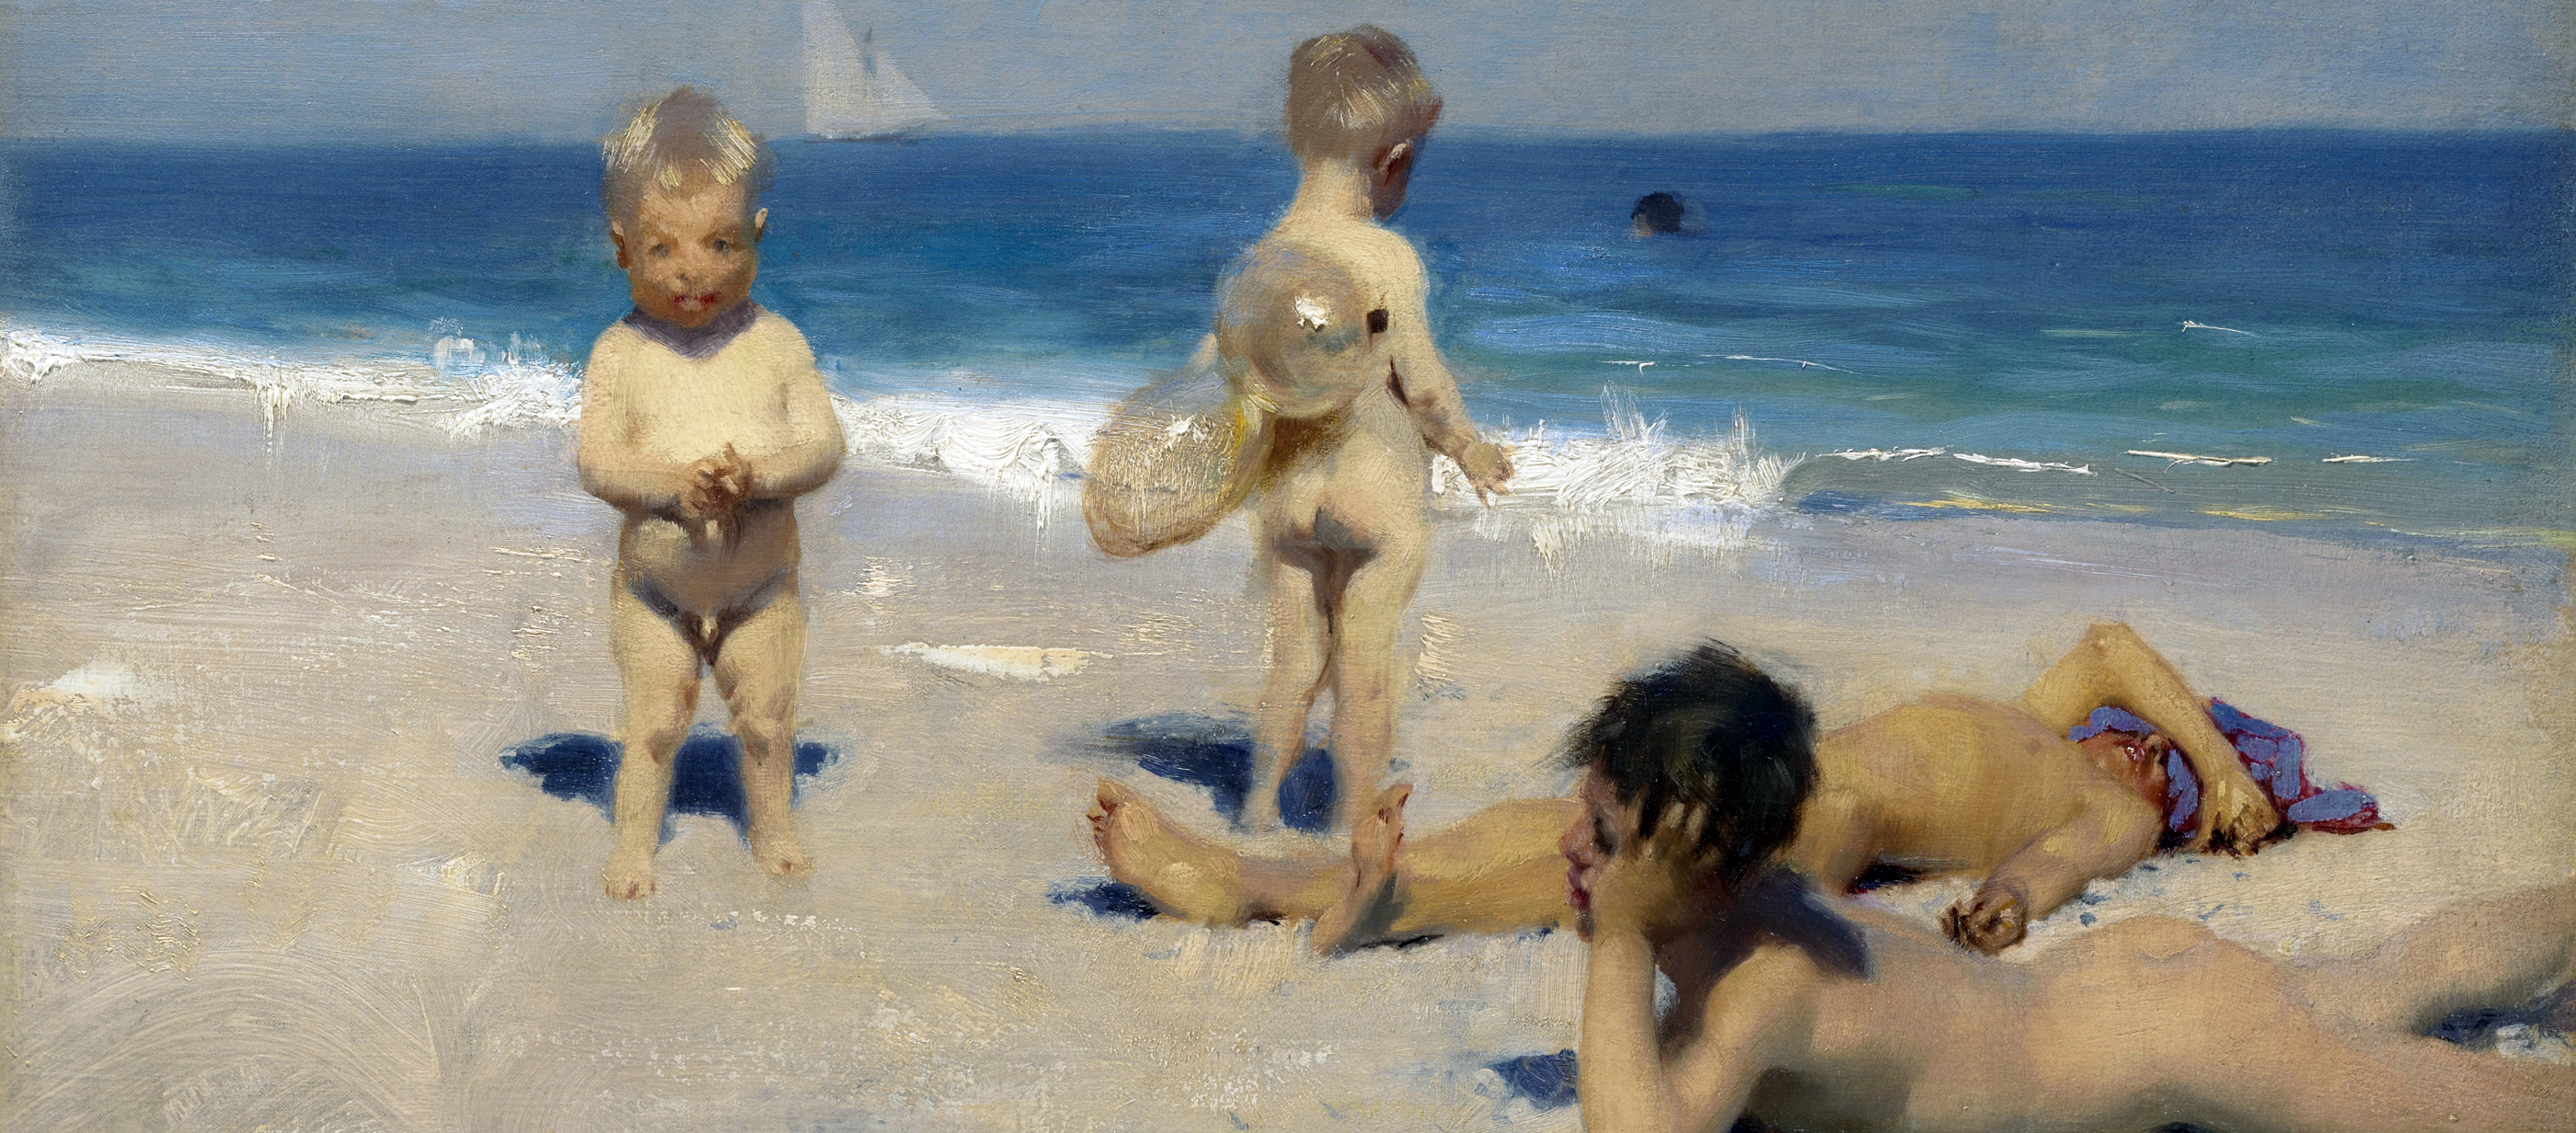 John Singer Sargent painting of small Italian boys on a beach.